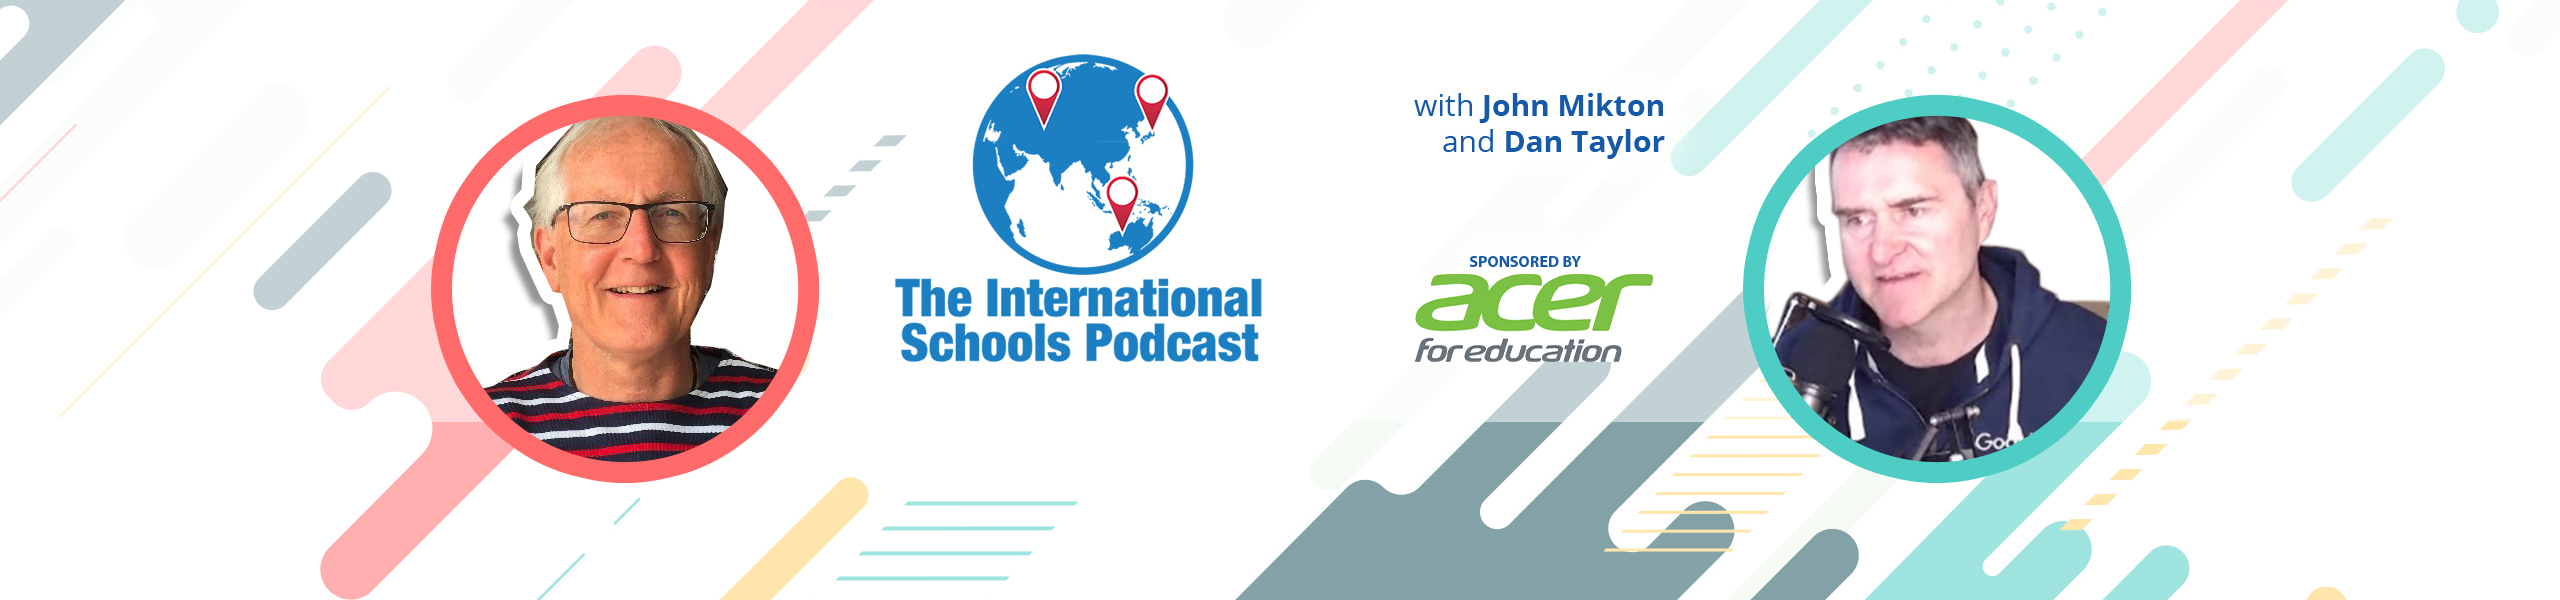 The International Schools Podcast